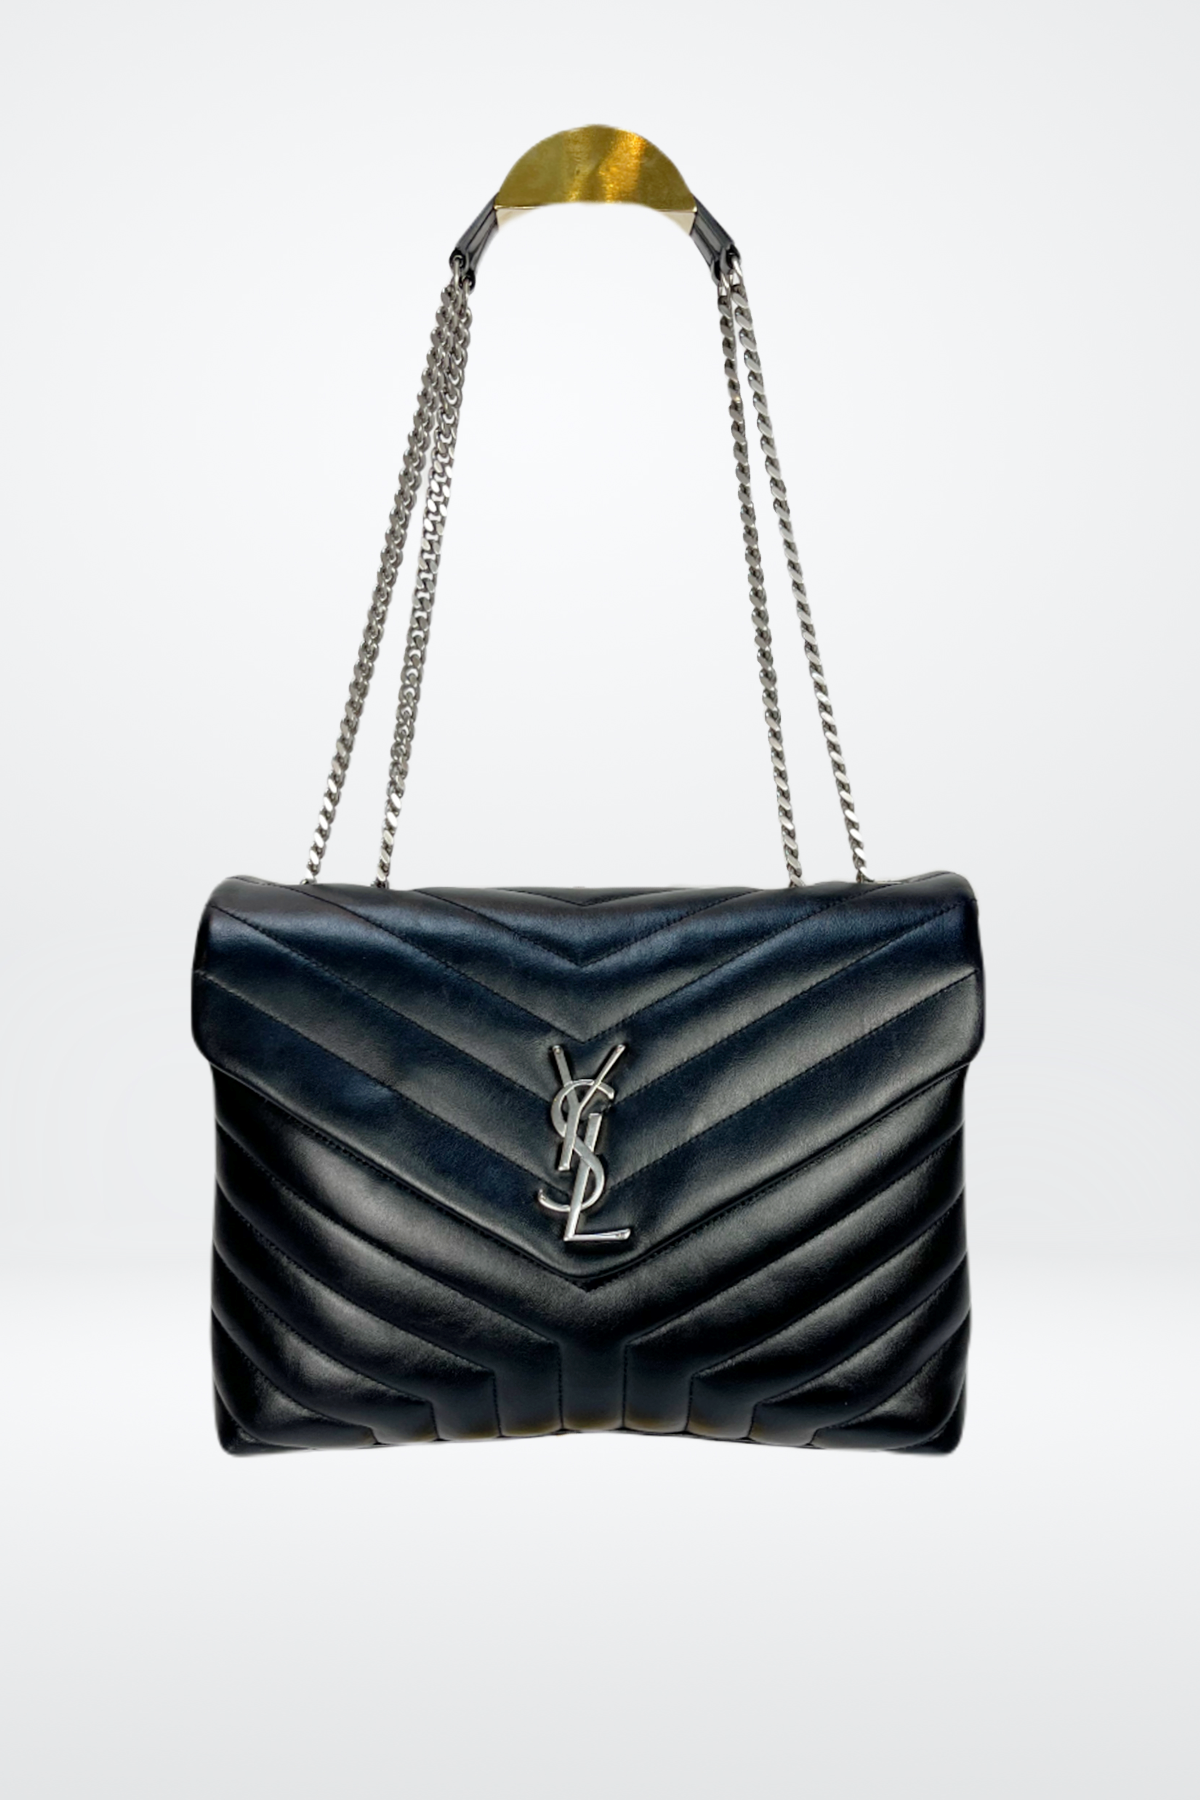 YSL Saint Laurent Loulou Medium Navy / Silver Leather Shoulder Bag